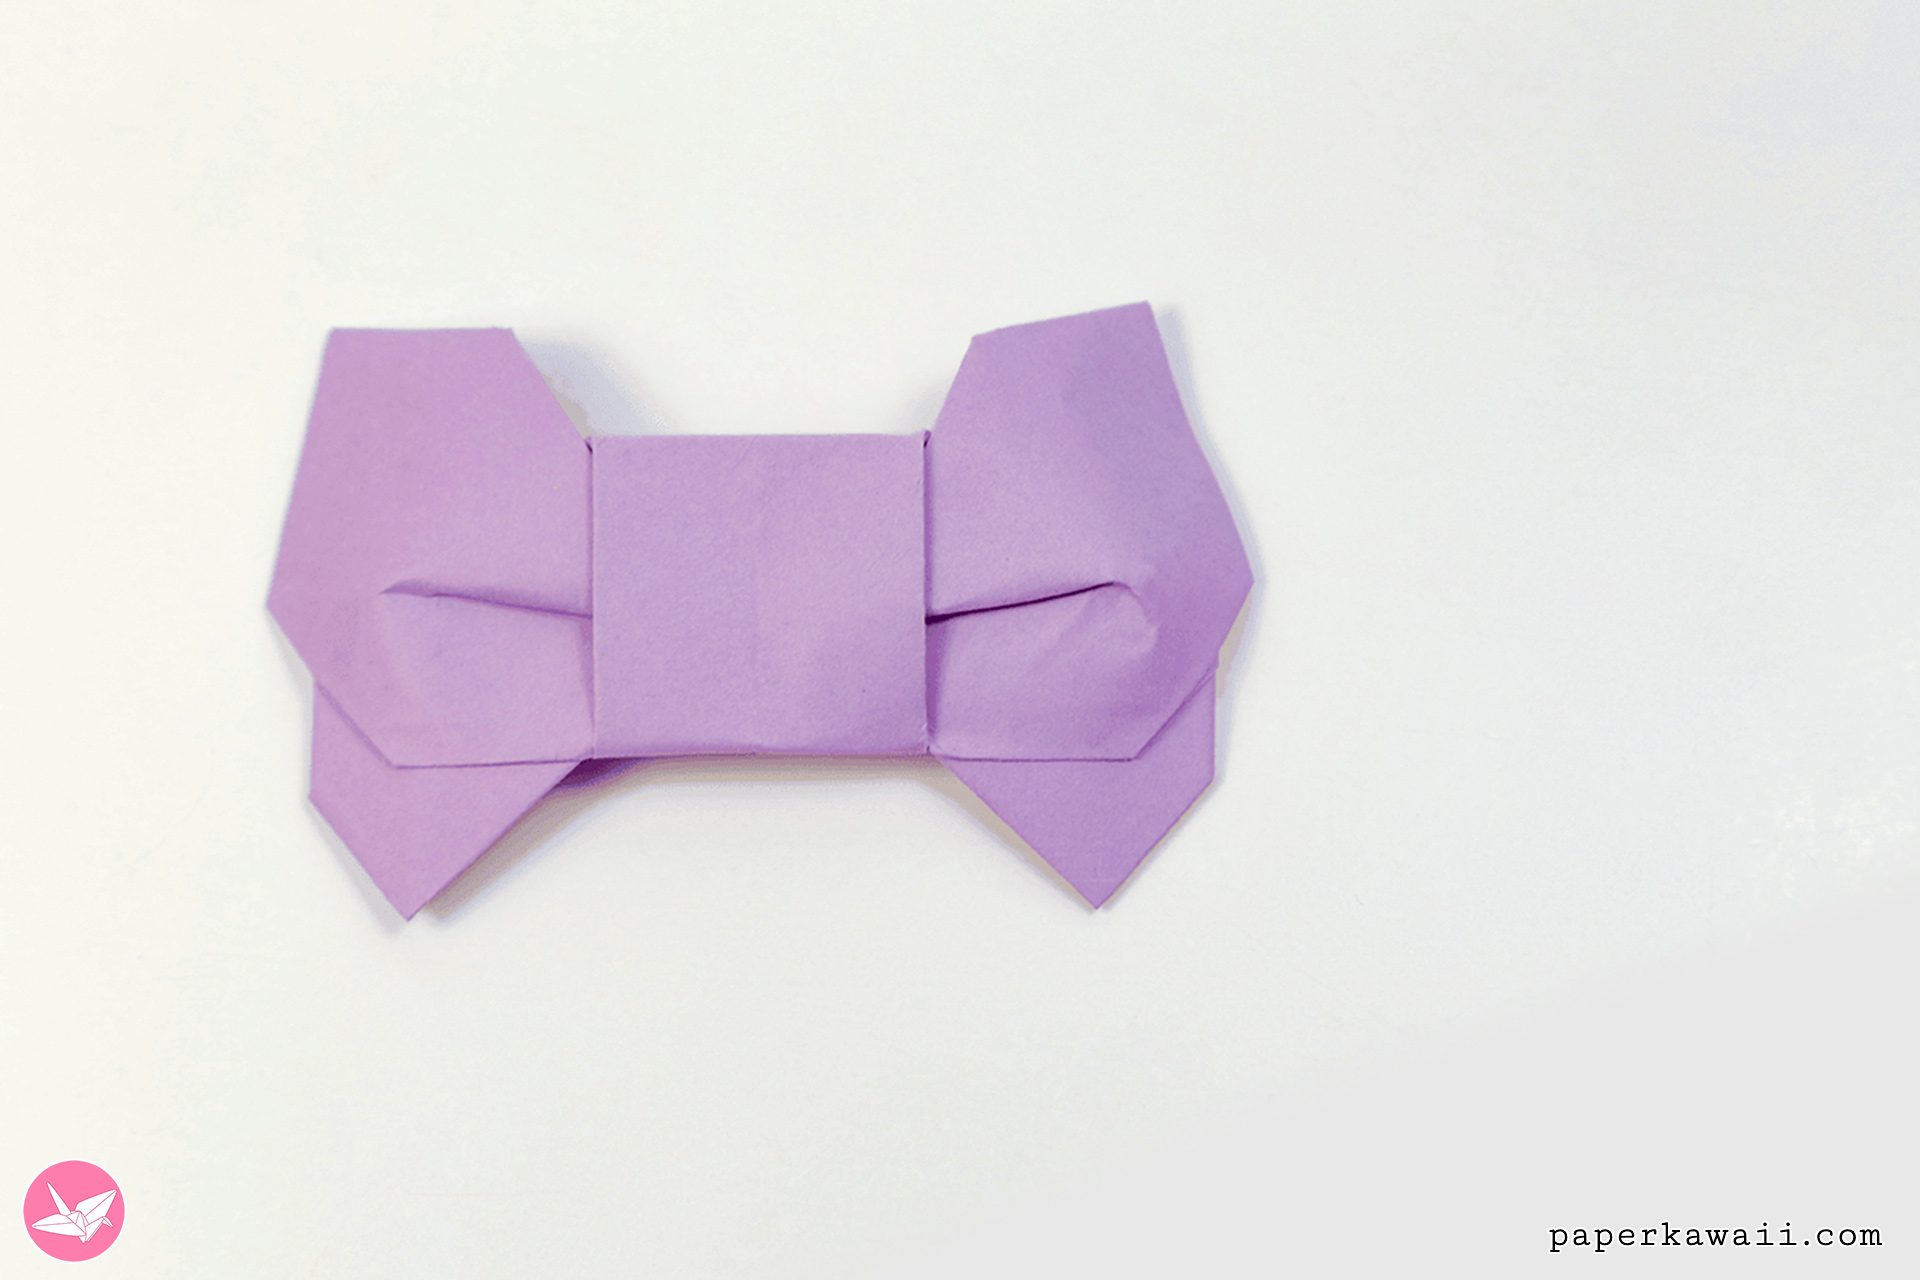 3d Origami Bow Tutorial Paper Kawaii 02